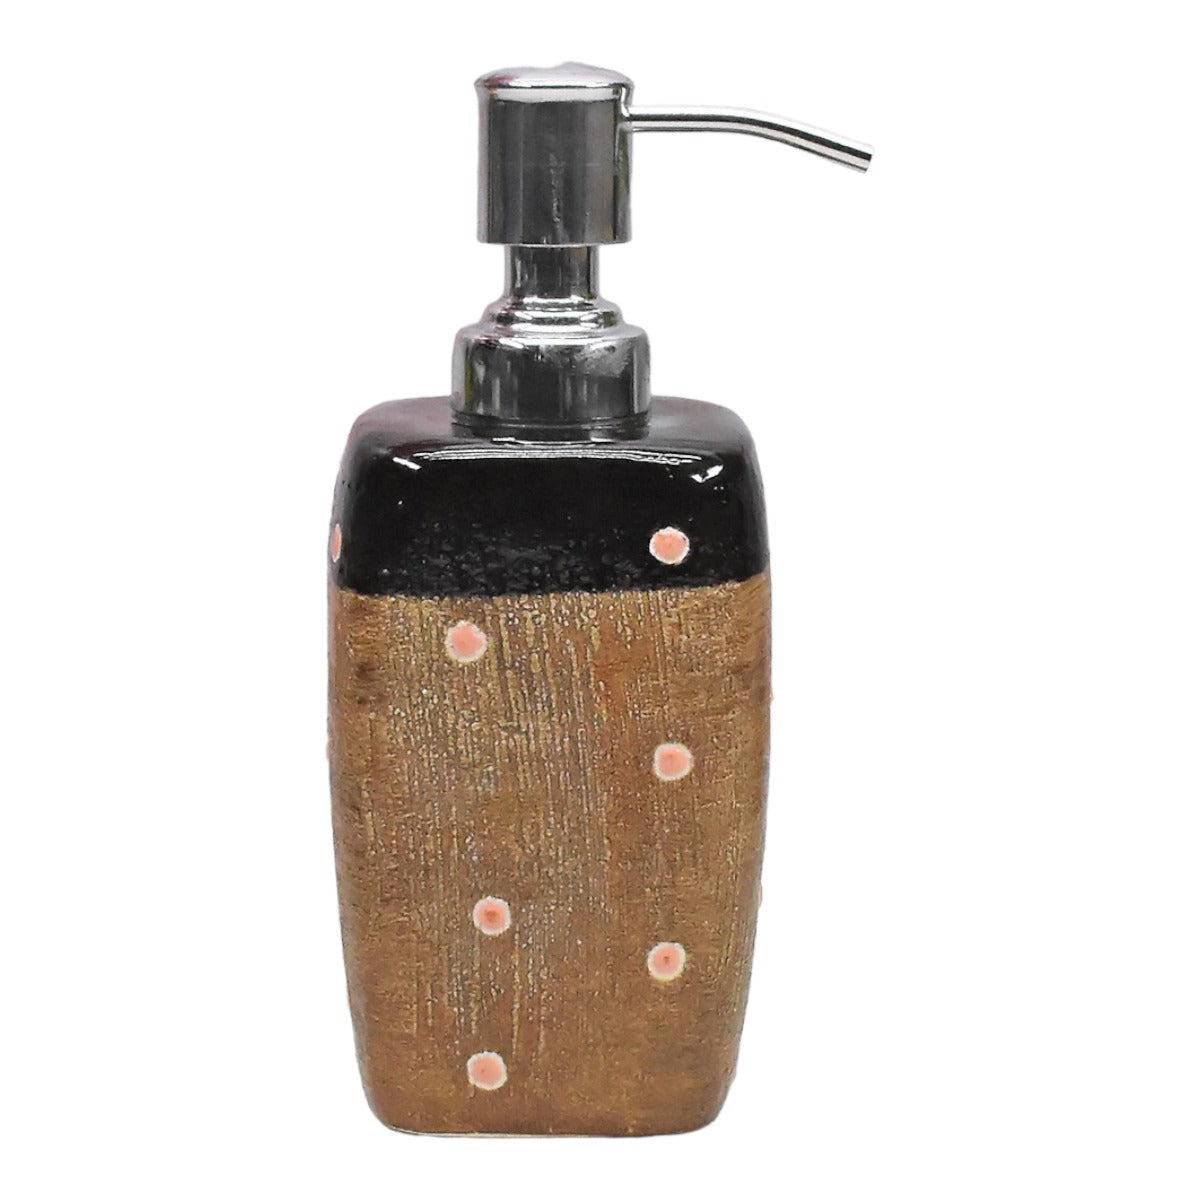 Ceramic Soap Dispenser handwash Pump for Bathroom, Set of 1, Multicolor (9691)